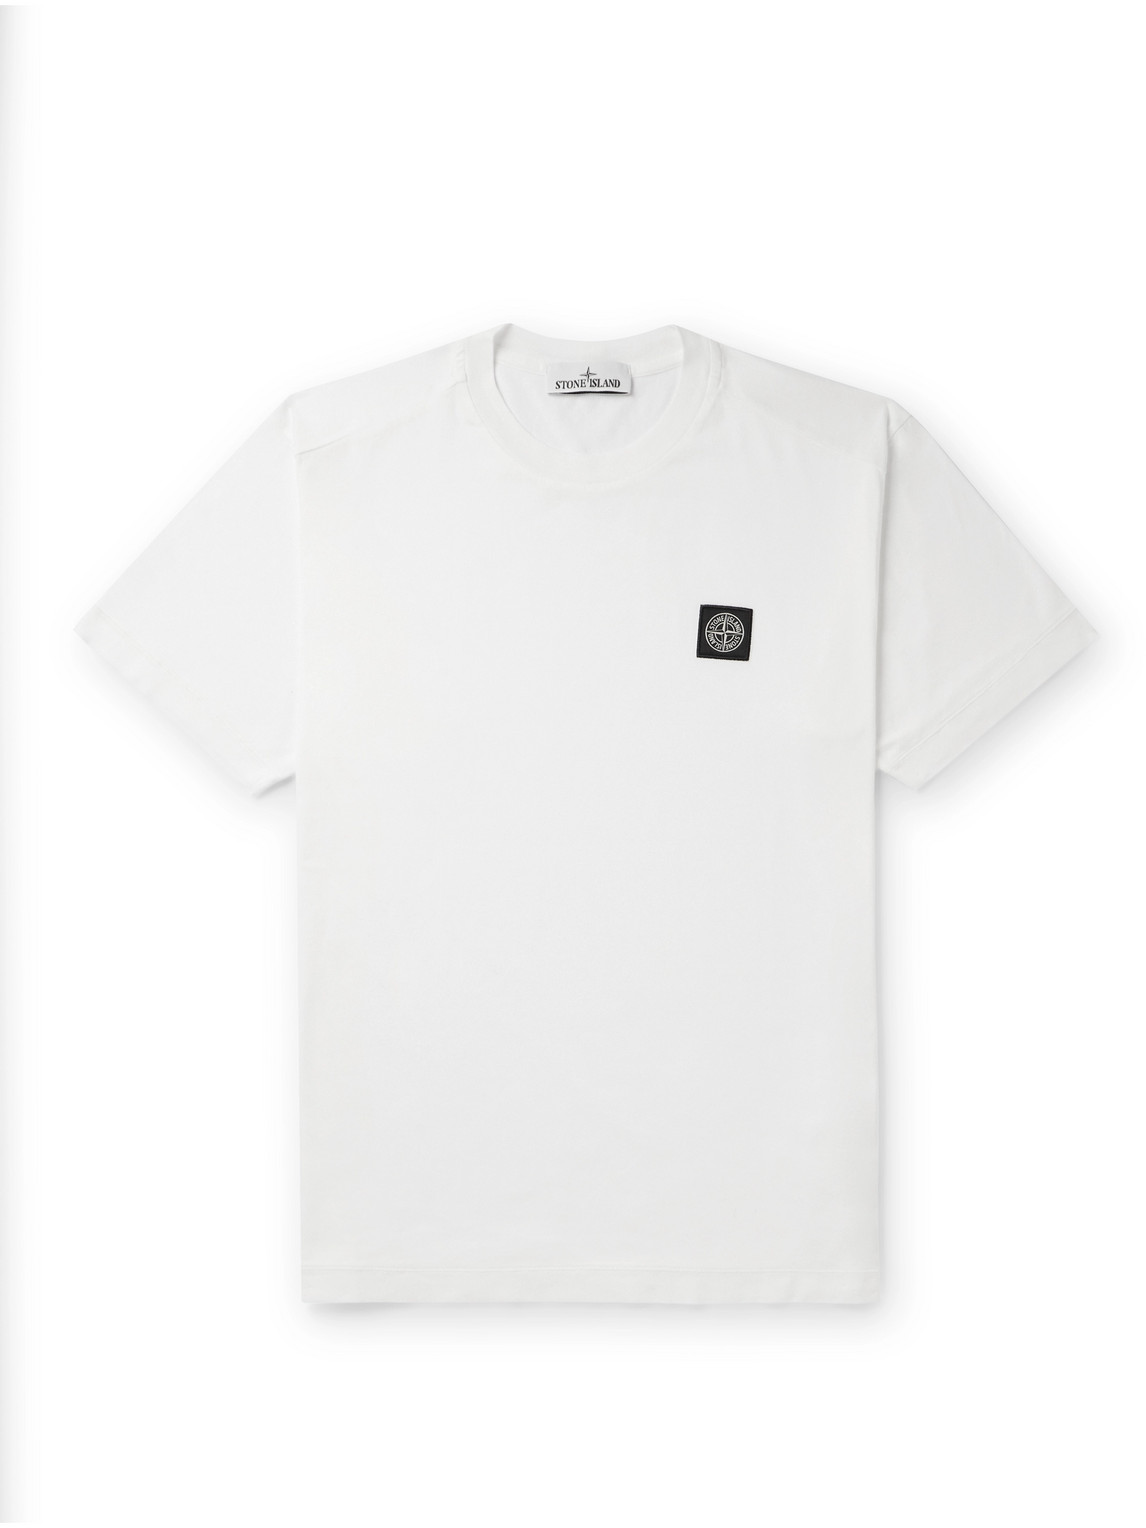 Stone Island - Logo-Appliquéd Cotton-Jersey T-Shirt - Men - White - XXL von Stone Island